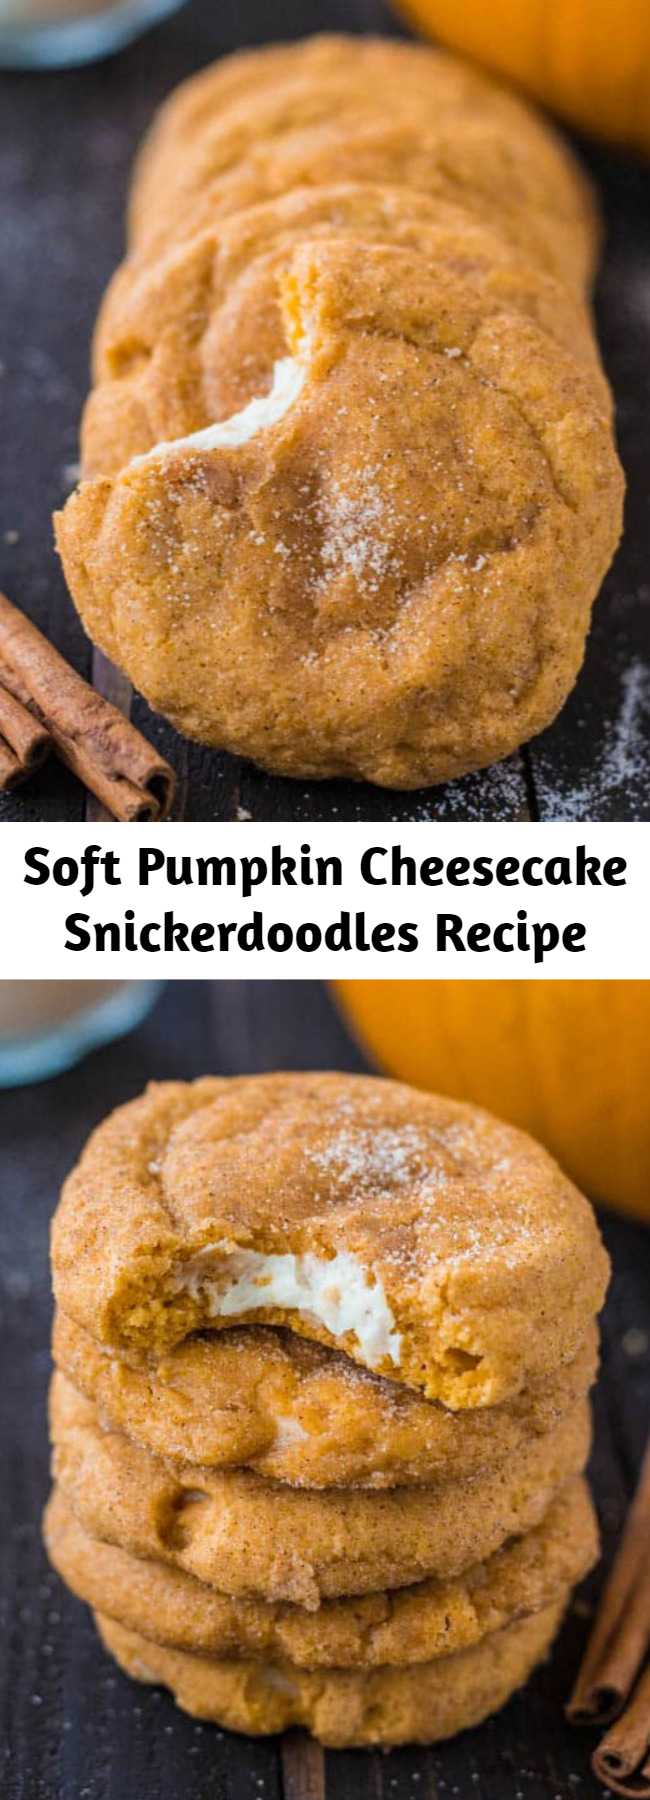 Soft Pumpkin Cheesecake Snickerdoodles Recipe - Delicious soft and puffy pumpkin snickerdoodles with a surprise cream cheese center.